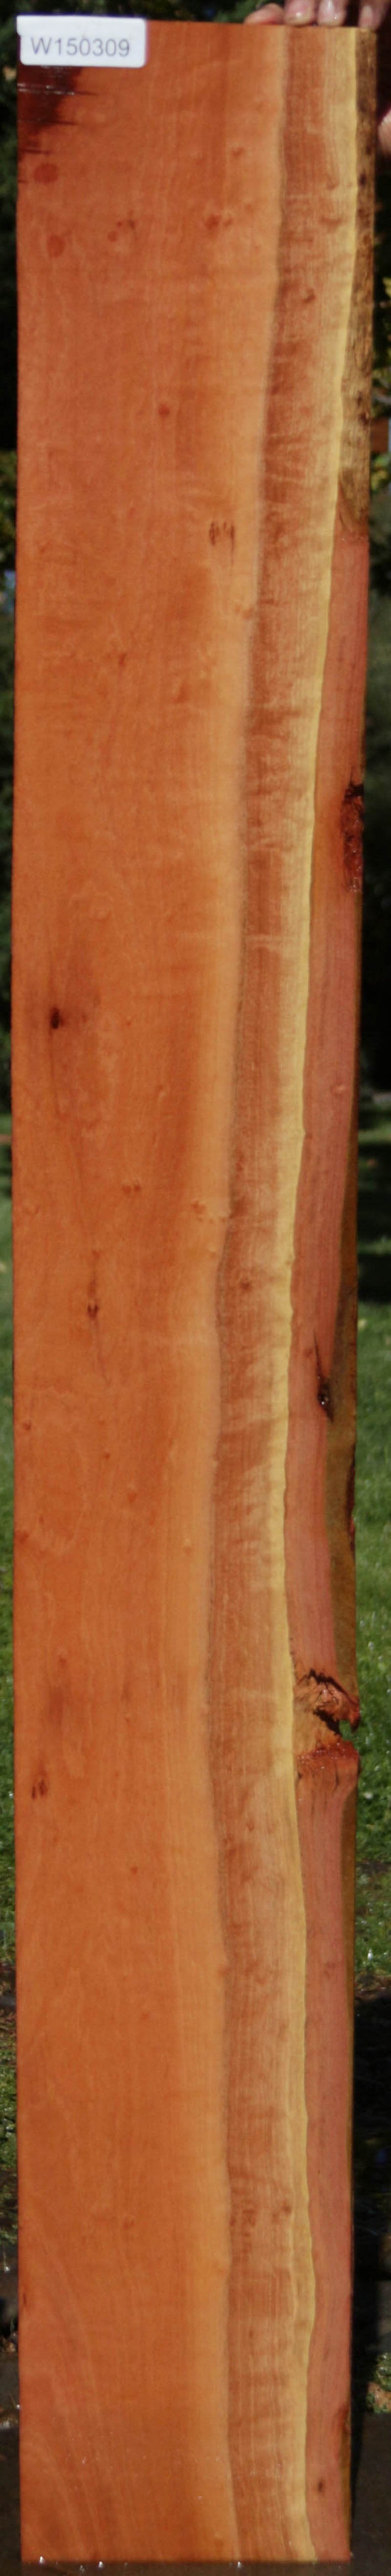 Red Gum Micro Lumber